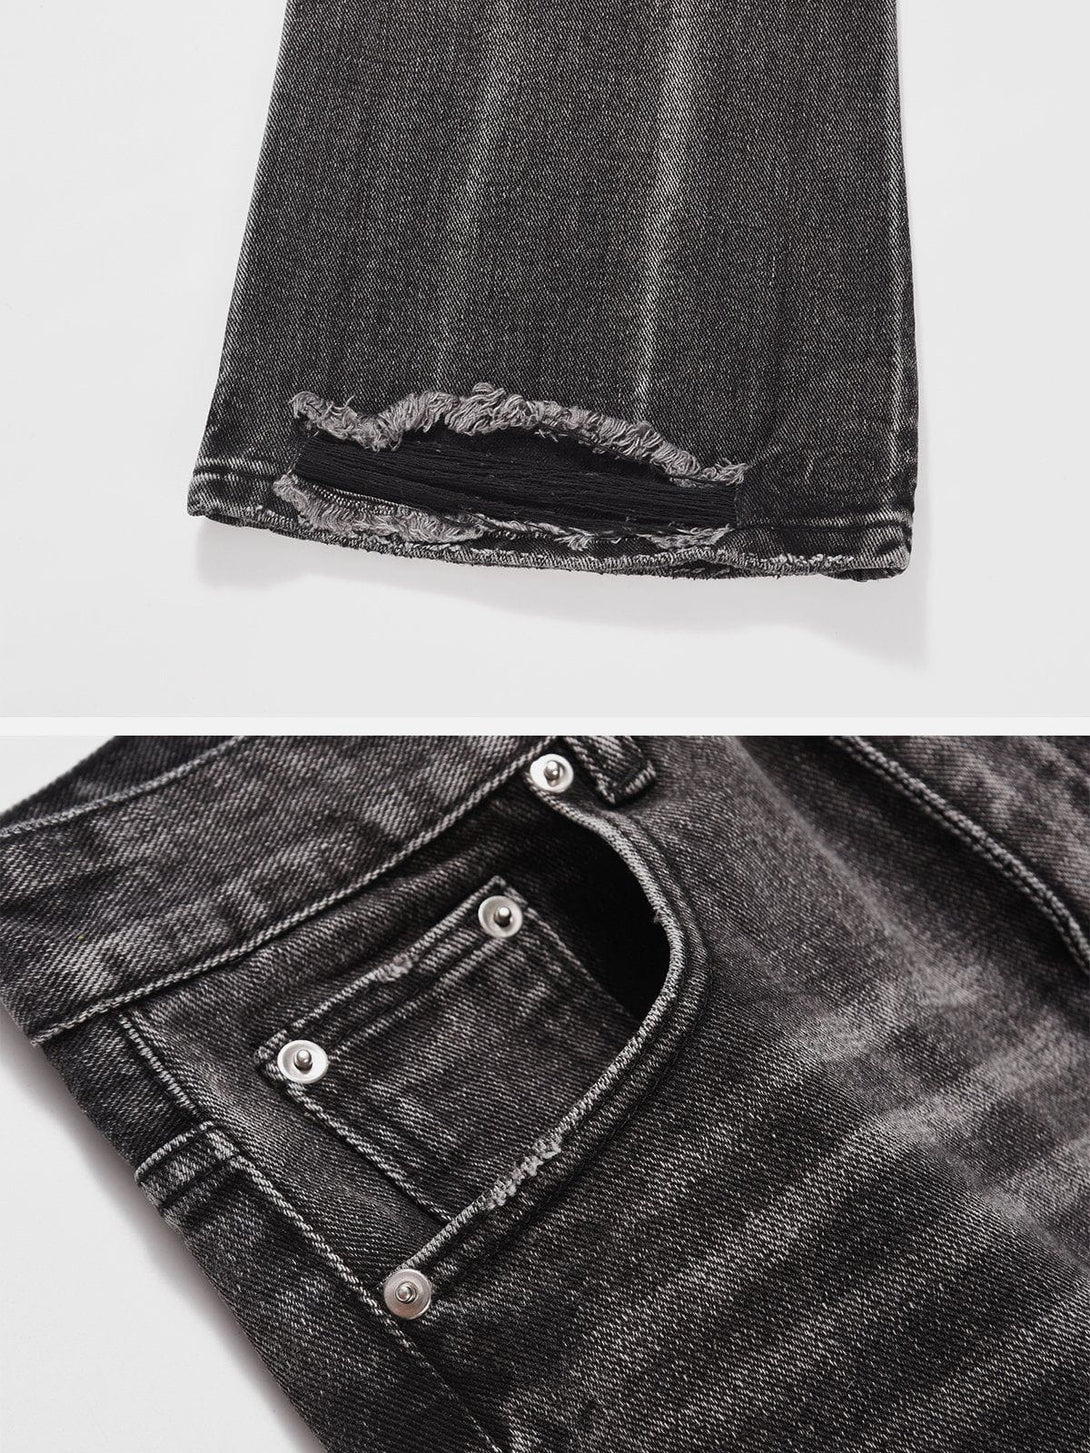 Levefly - Vintage Washed Distressed Jeans - Streetwear Fashion - levefly.com